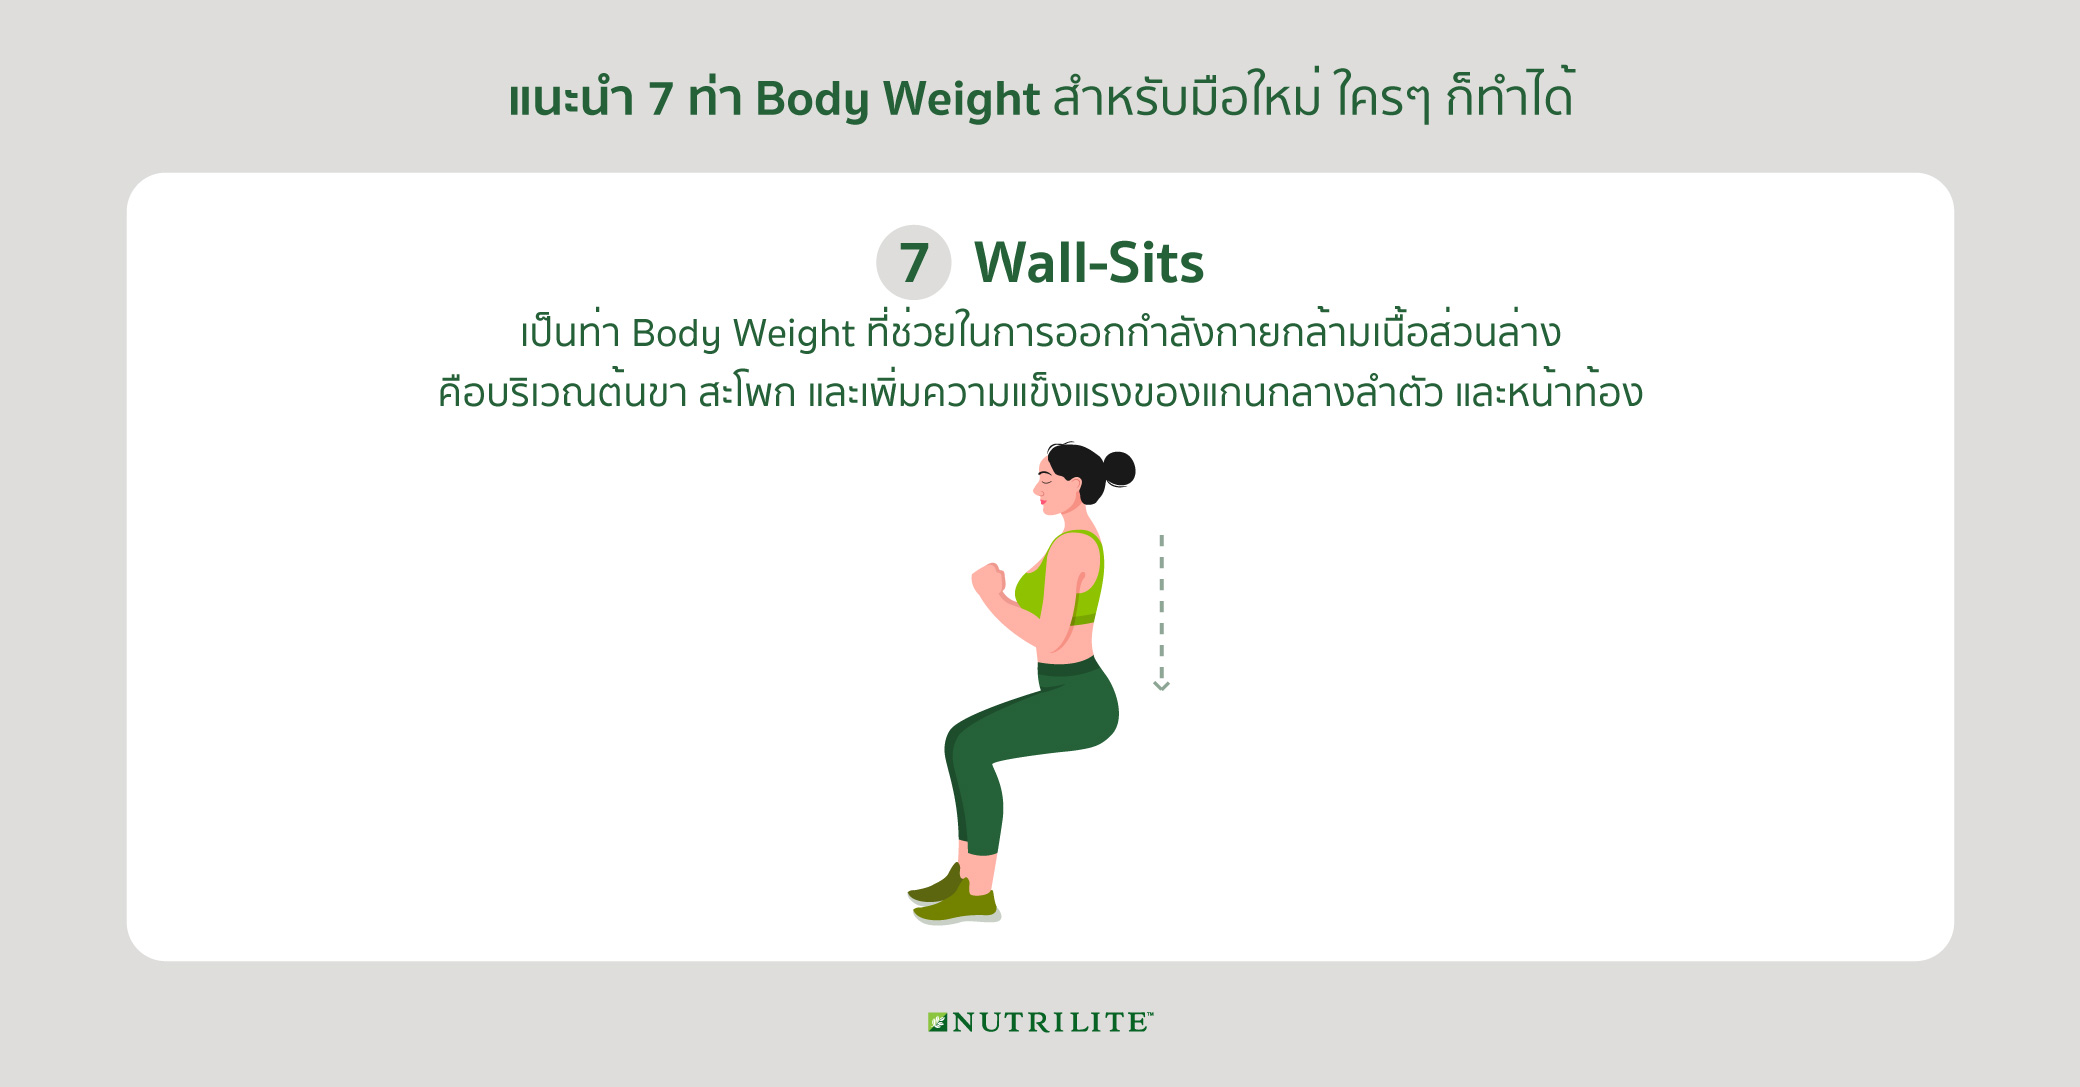 7. Wall-Sits